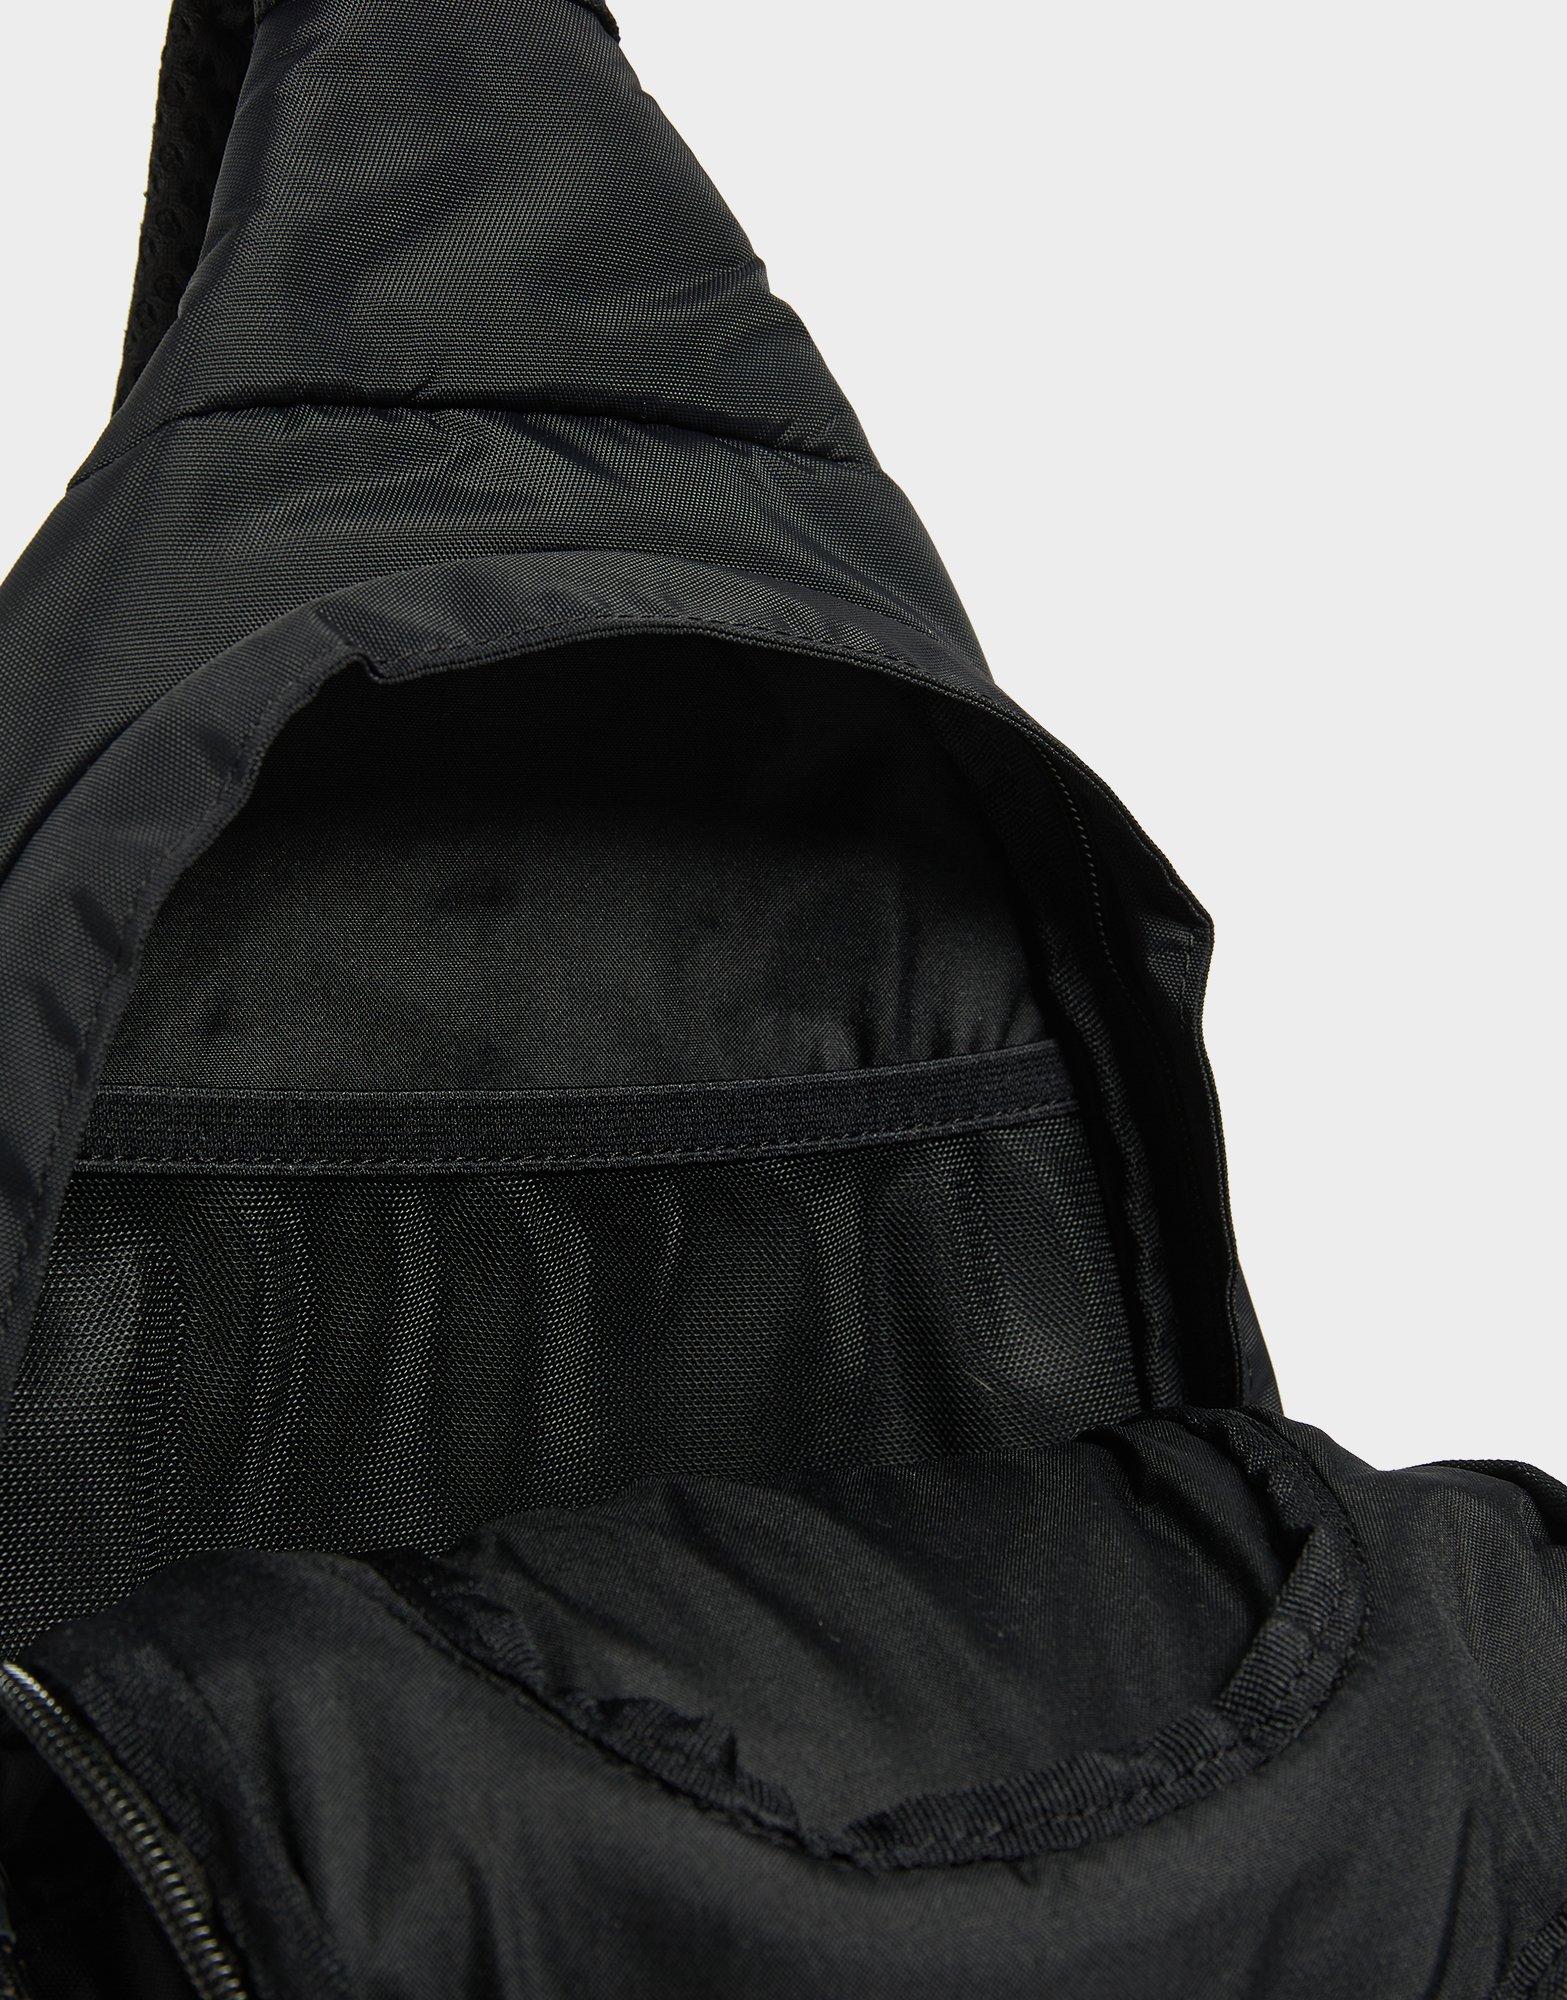 Nike Sportswear Essentials Sling Bag Black